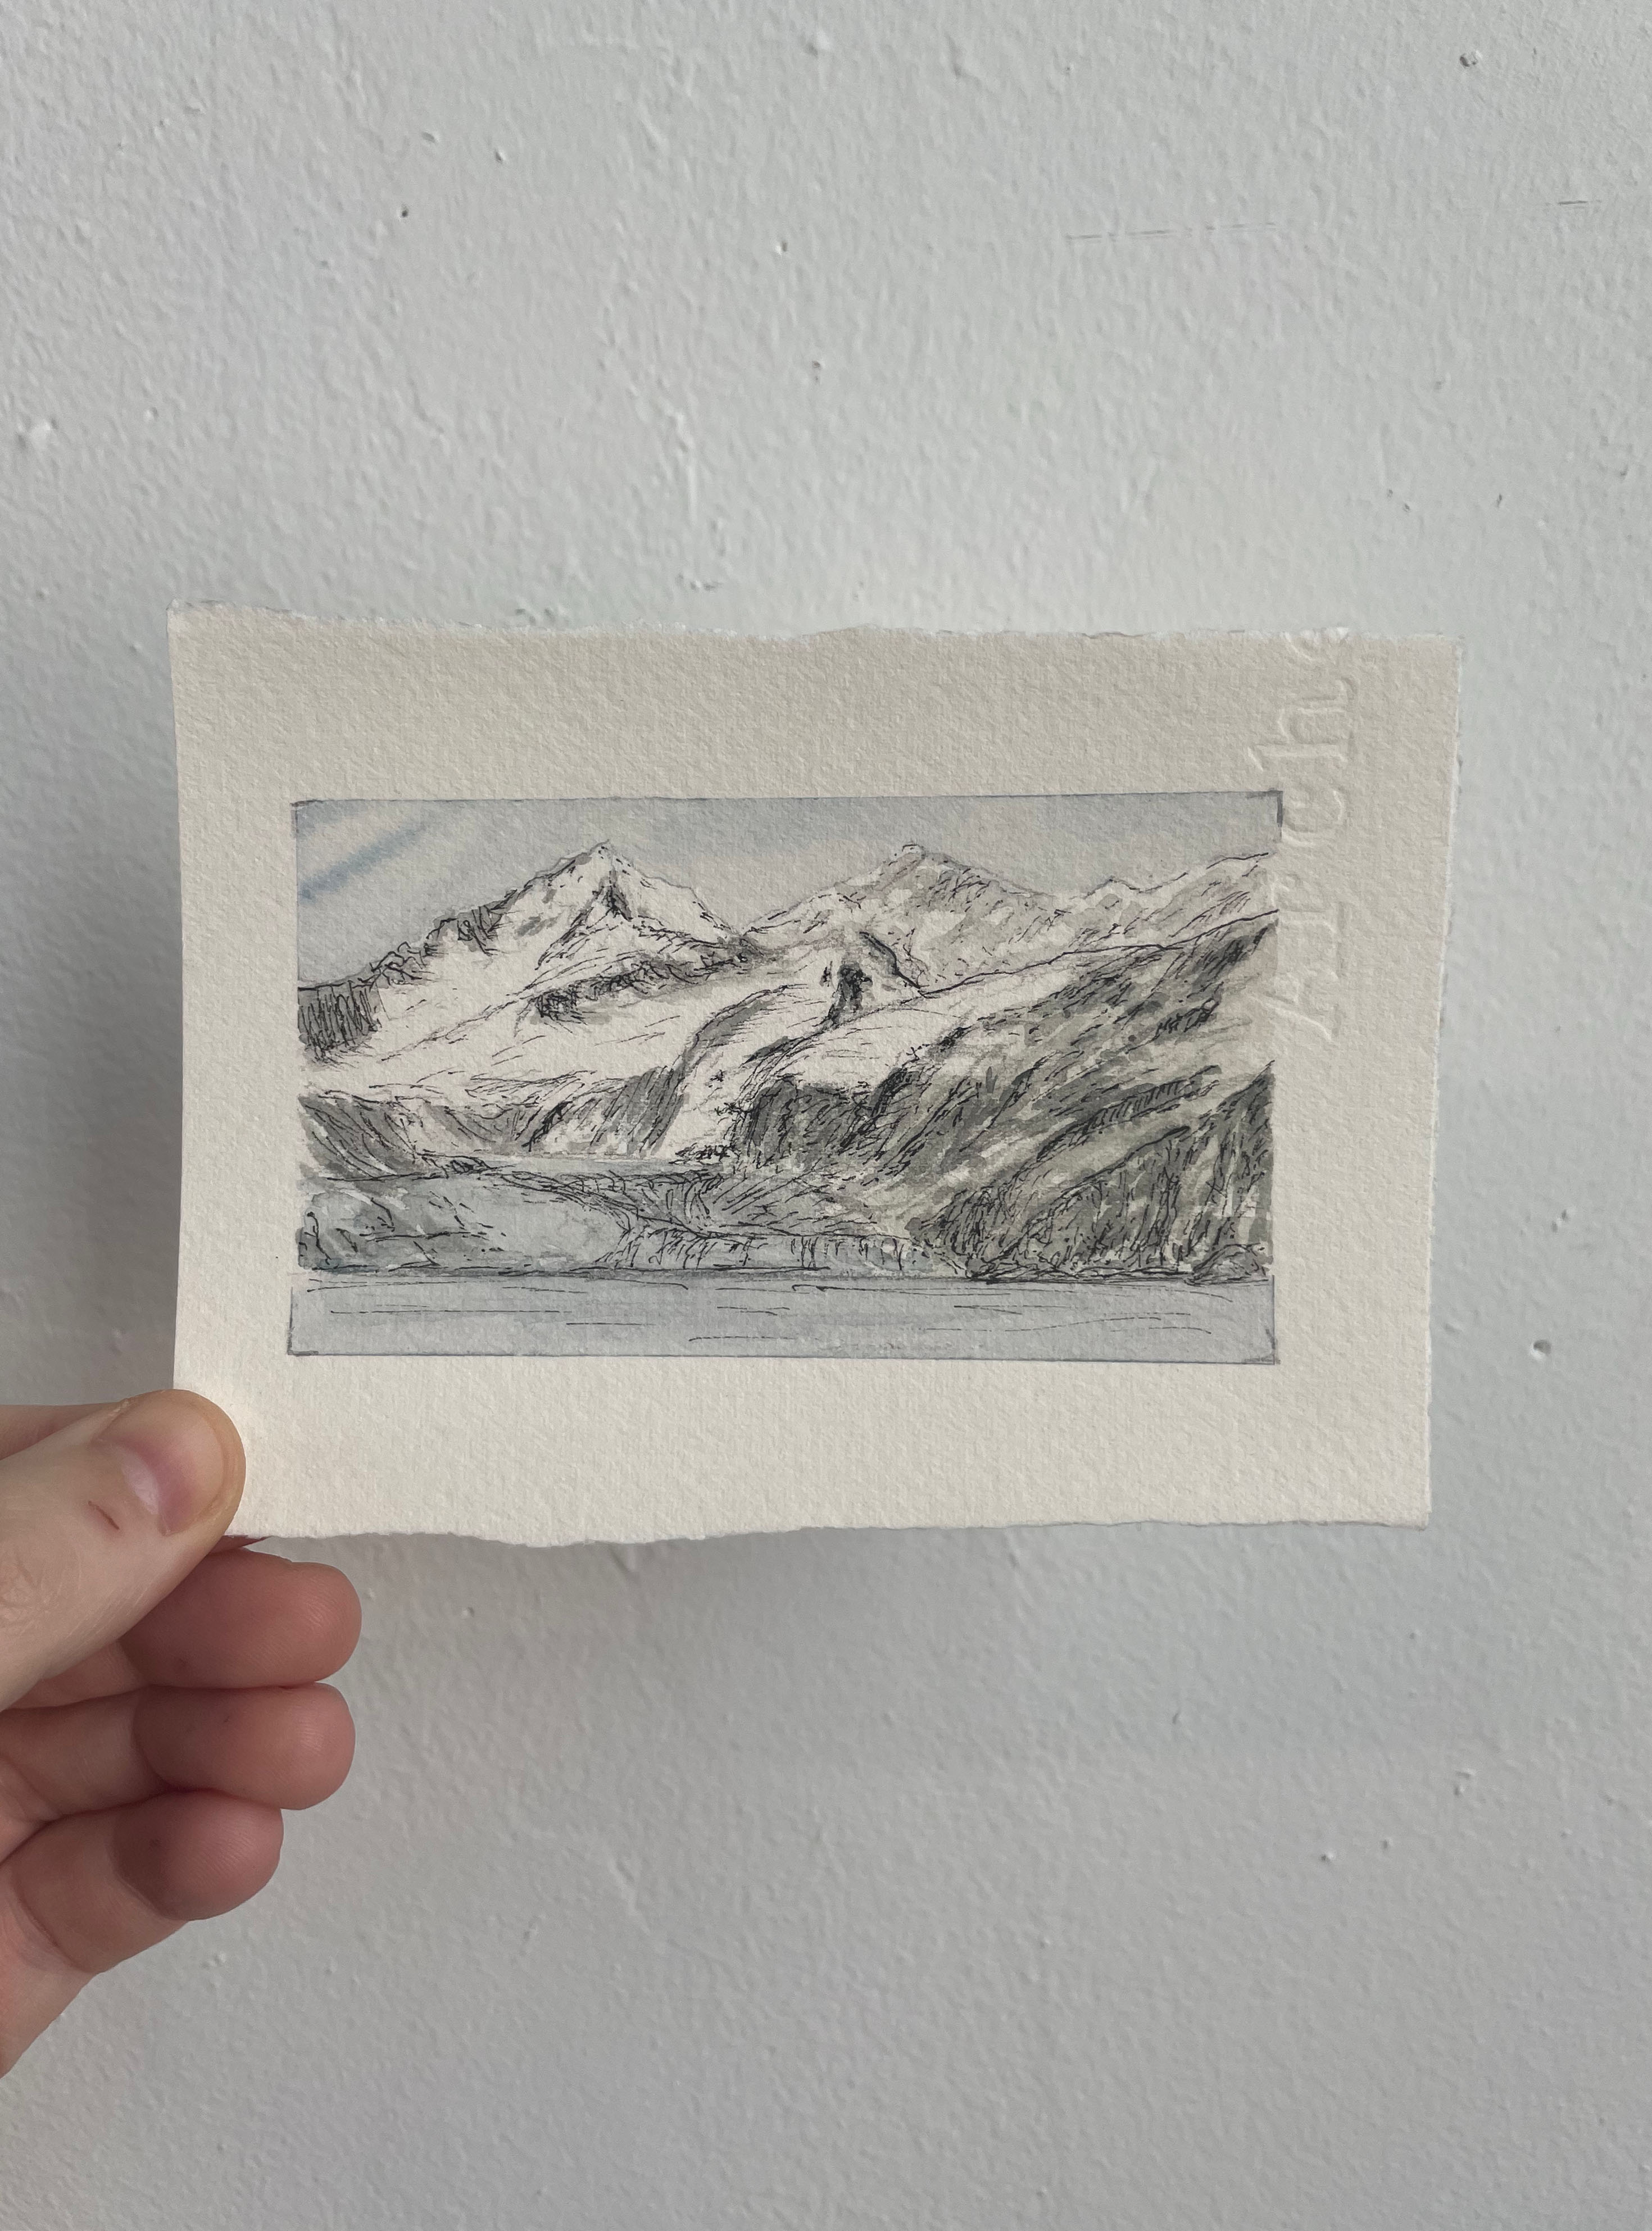 Glacier Bay National Park Mini Watercolor Original